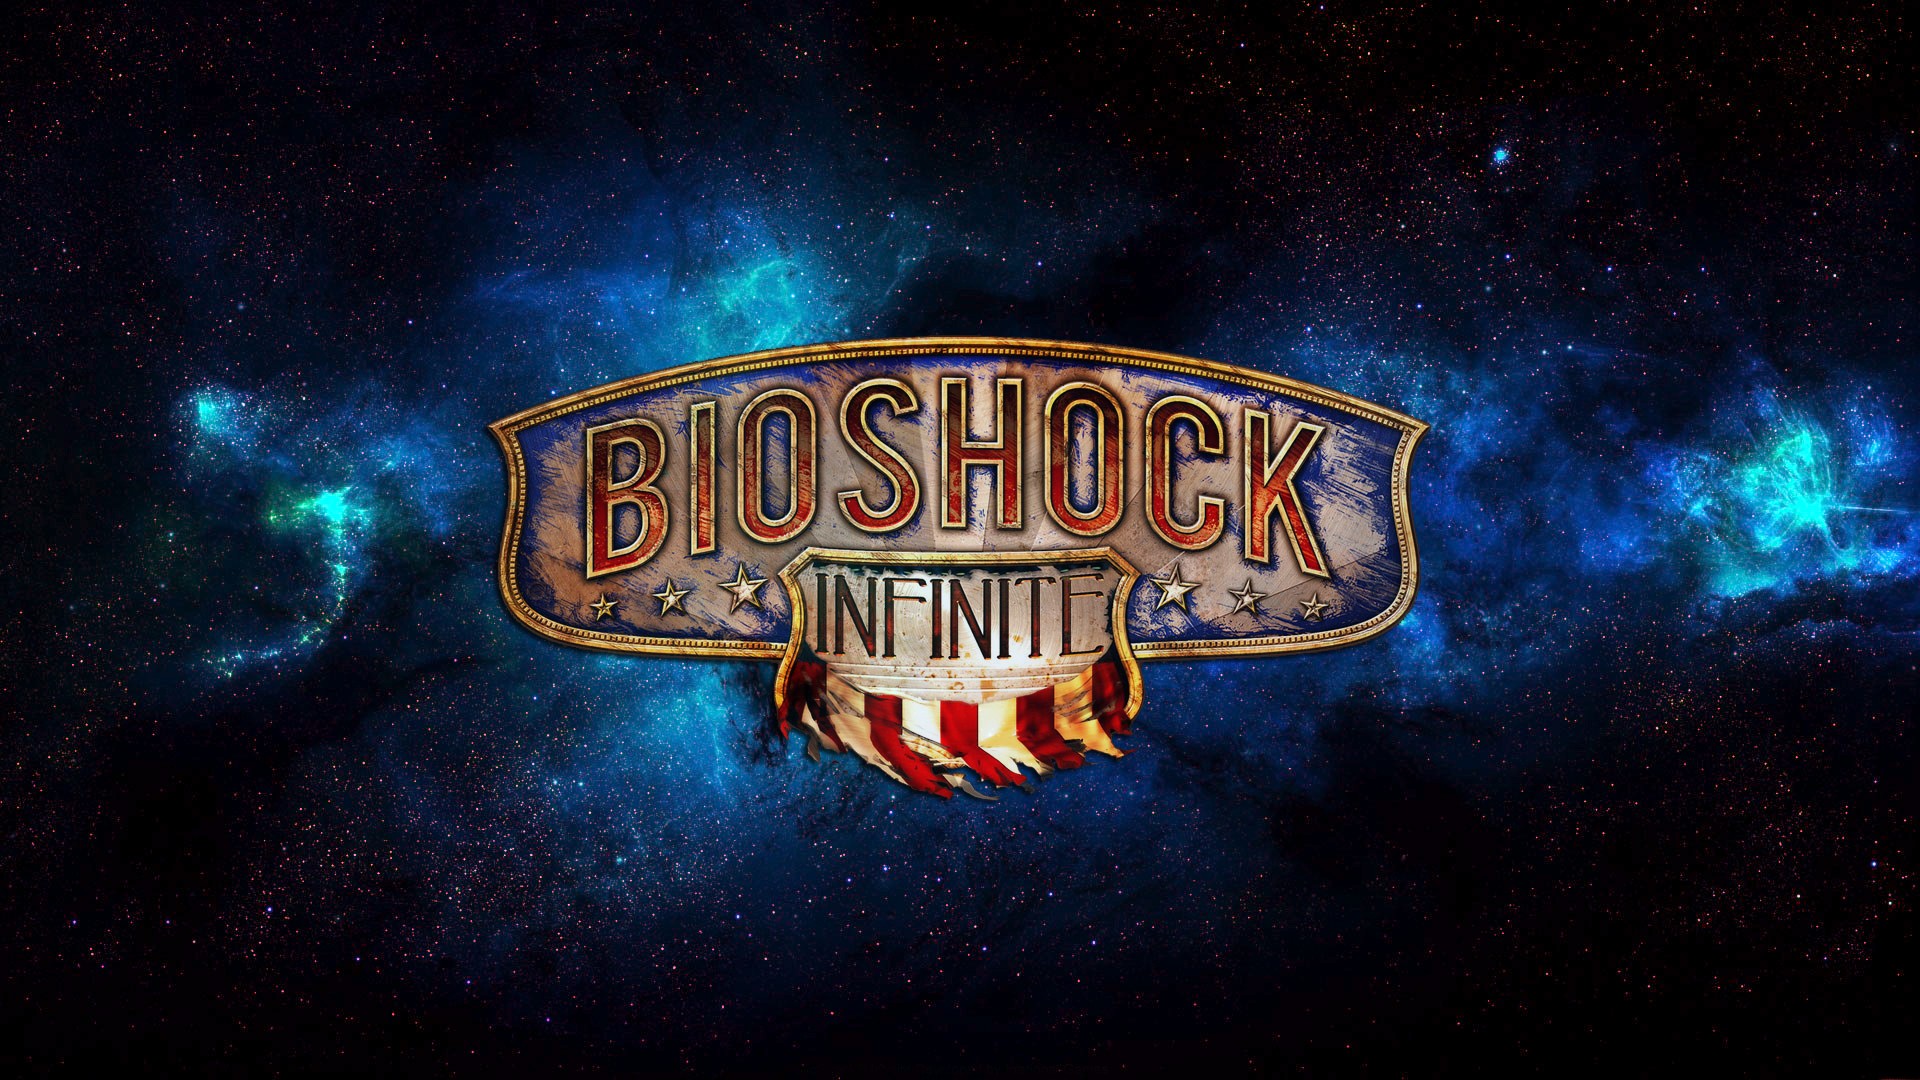 BioShock, BioShock Infinite, Video Games, PC Gaming, Consoles, Gamers, Blue, Red, Space Wallpaper